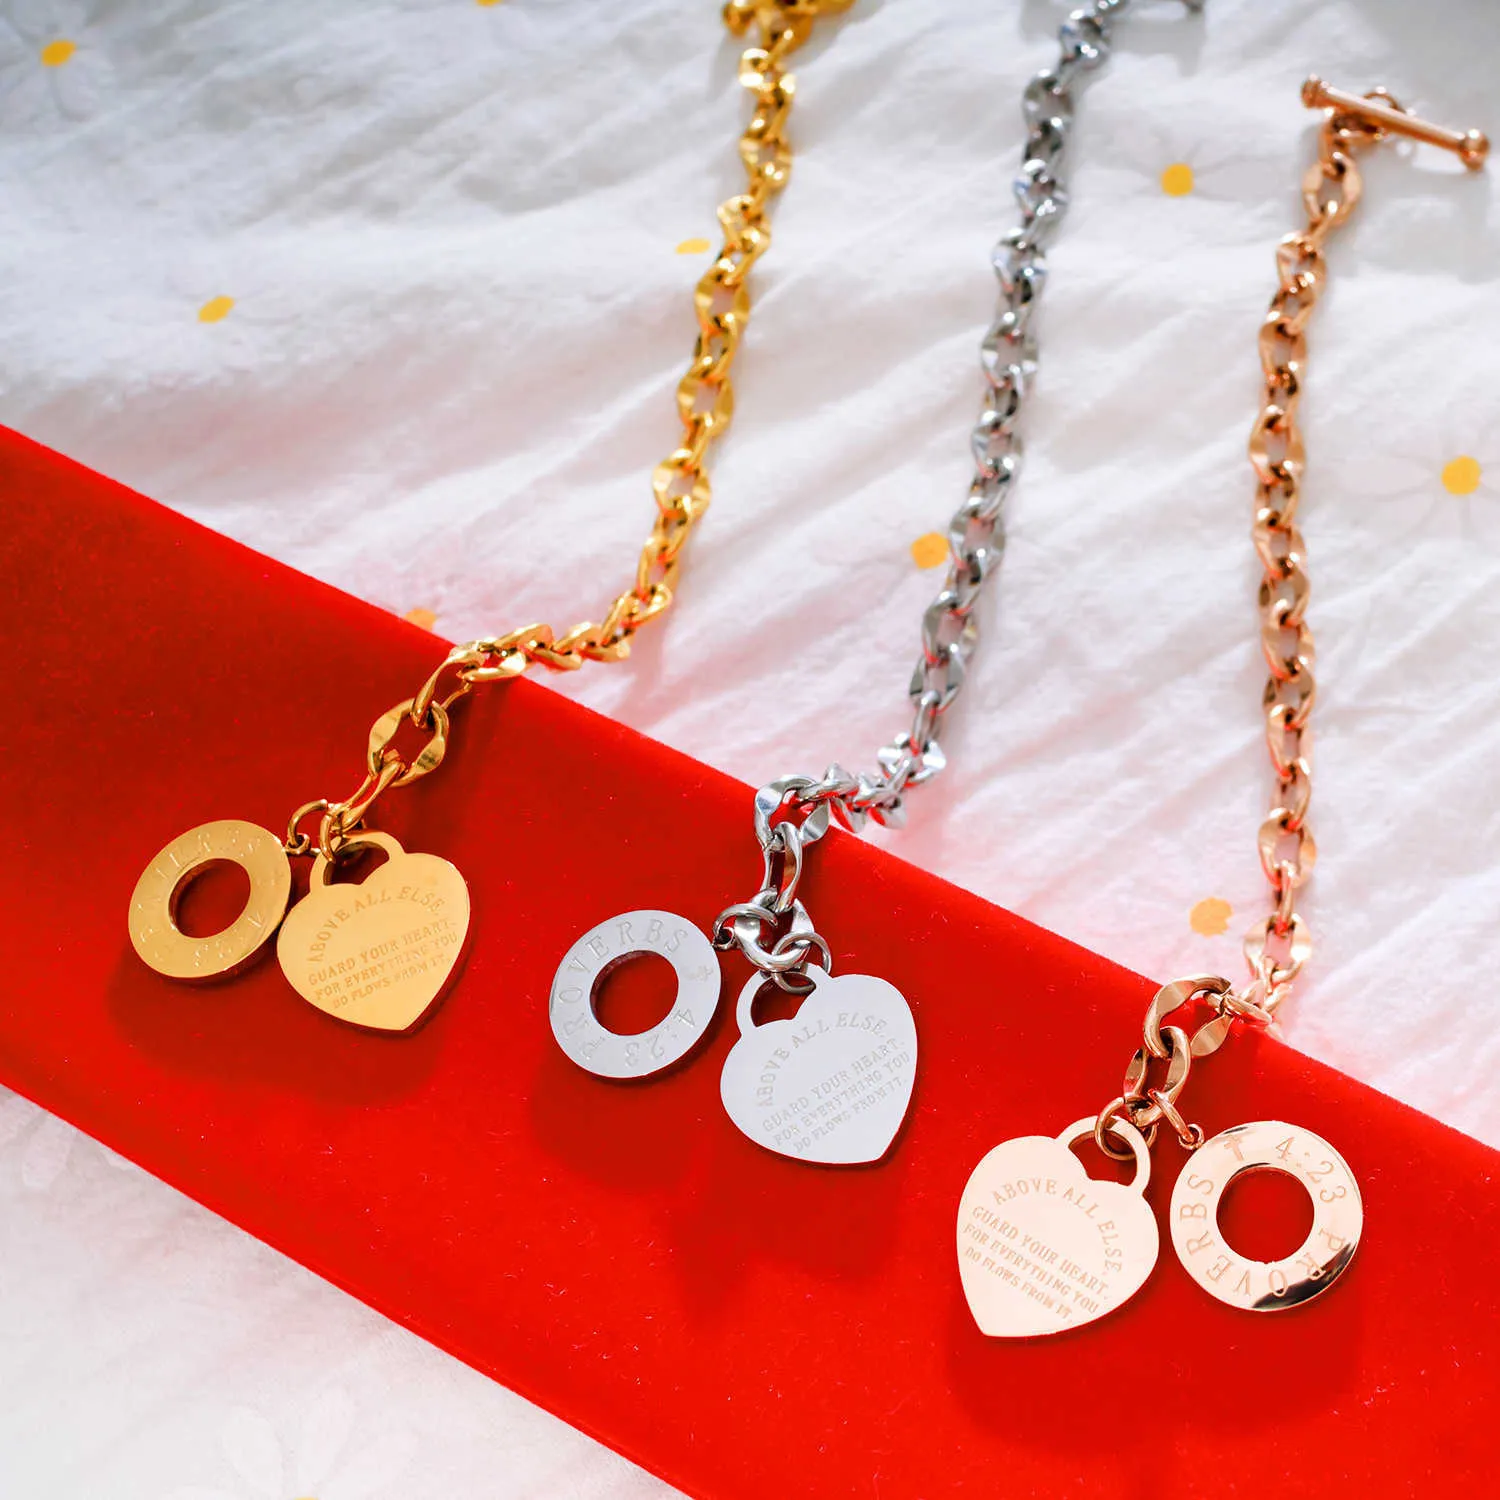 Heart-shaped Bracelet Proverbs Pendant for Women Gift Metal Brand Designbracelets Fashion Female Gold Jewelry Gifts Q0603303r